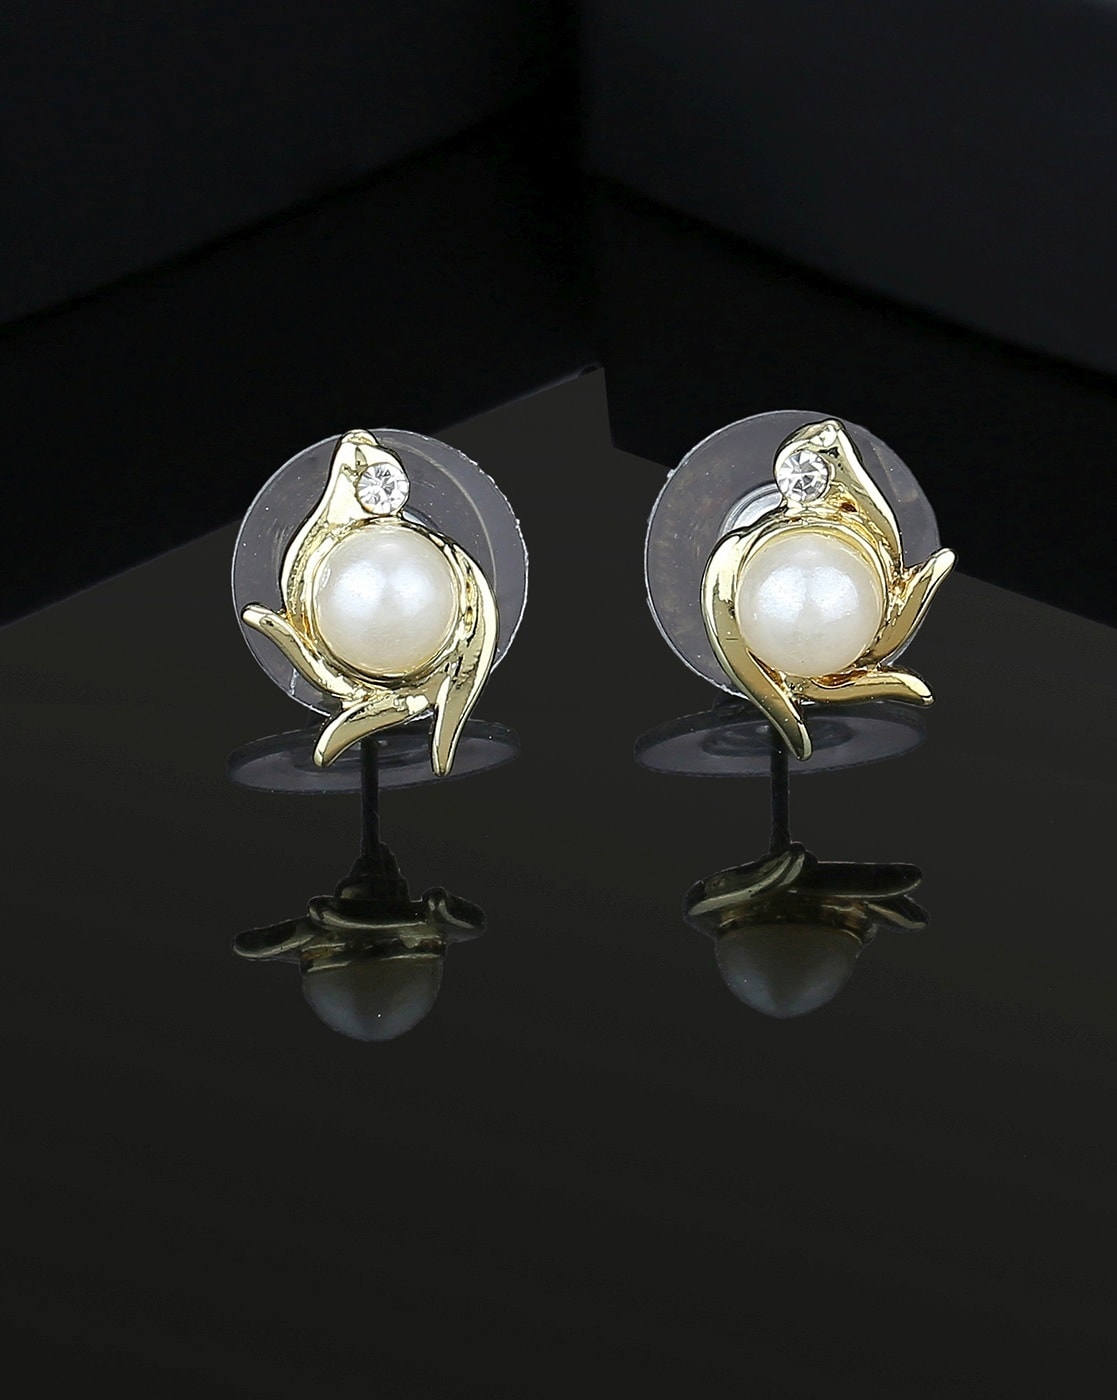 Pearl Stud Earrings in 18K Yellow Gold with Pearls and Diamonds, 14mm |  David Yurman